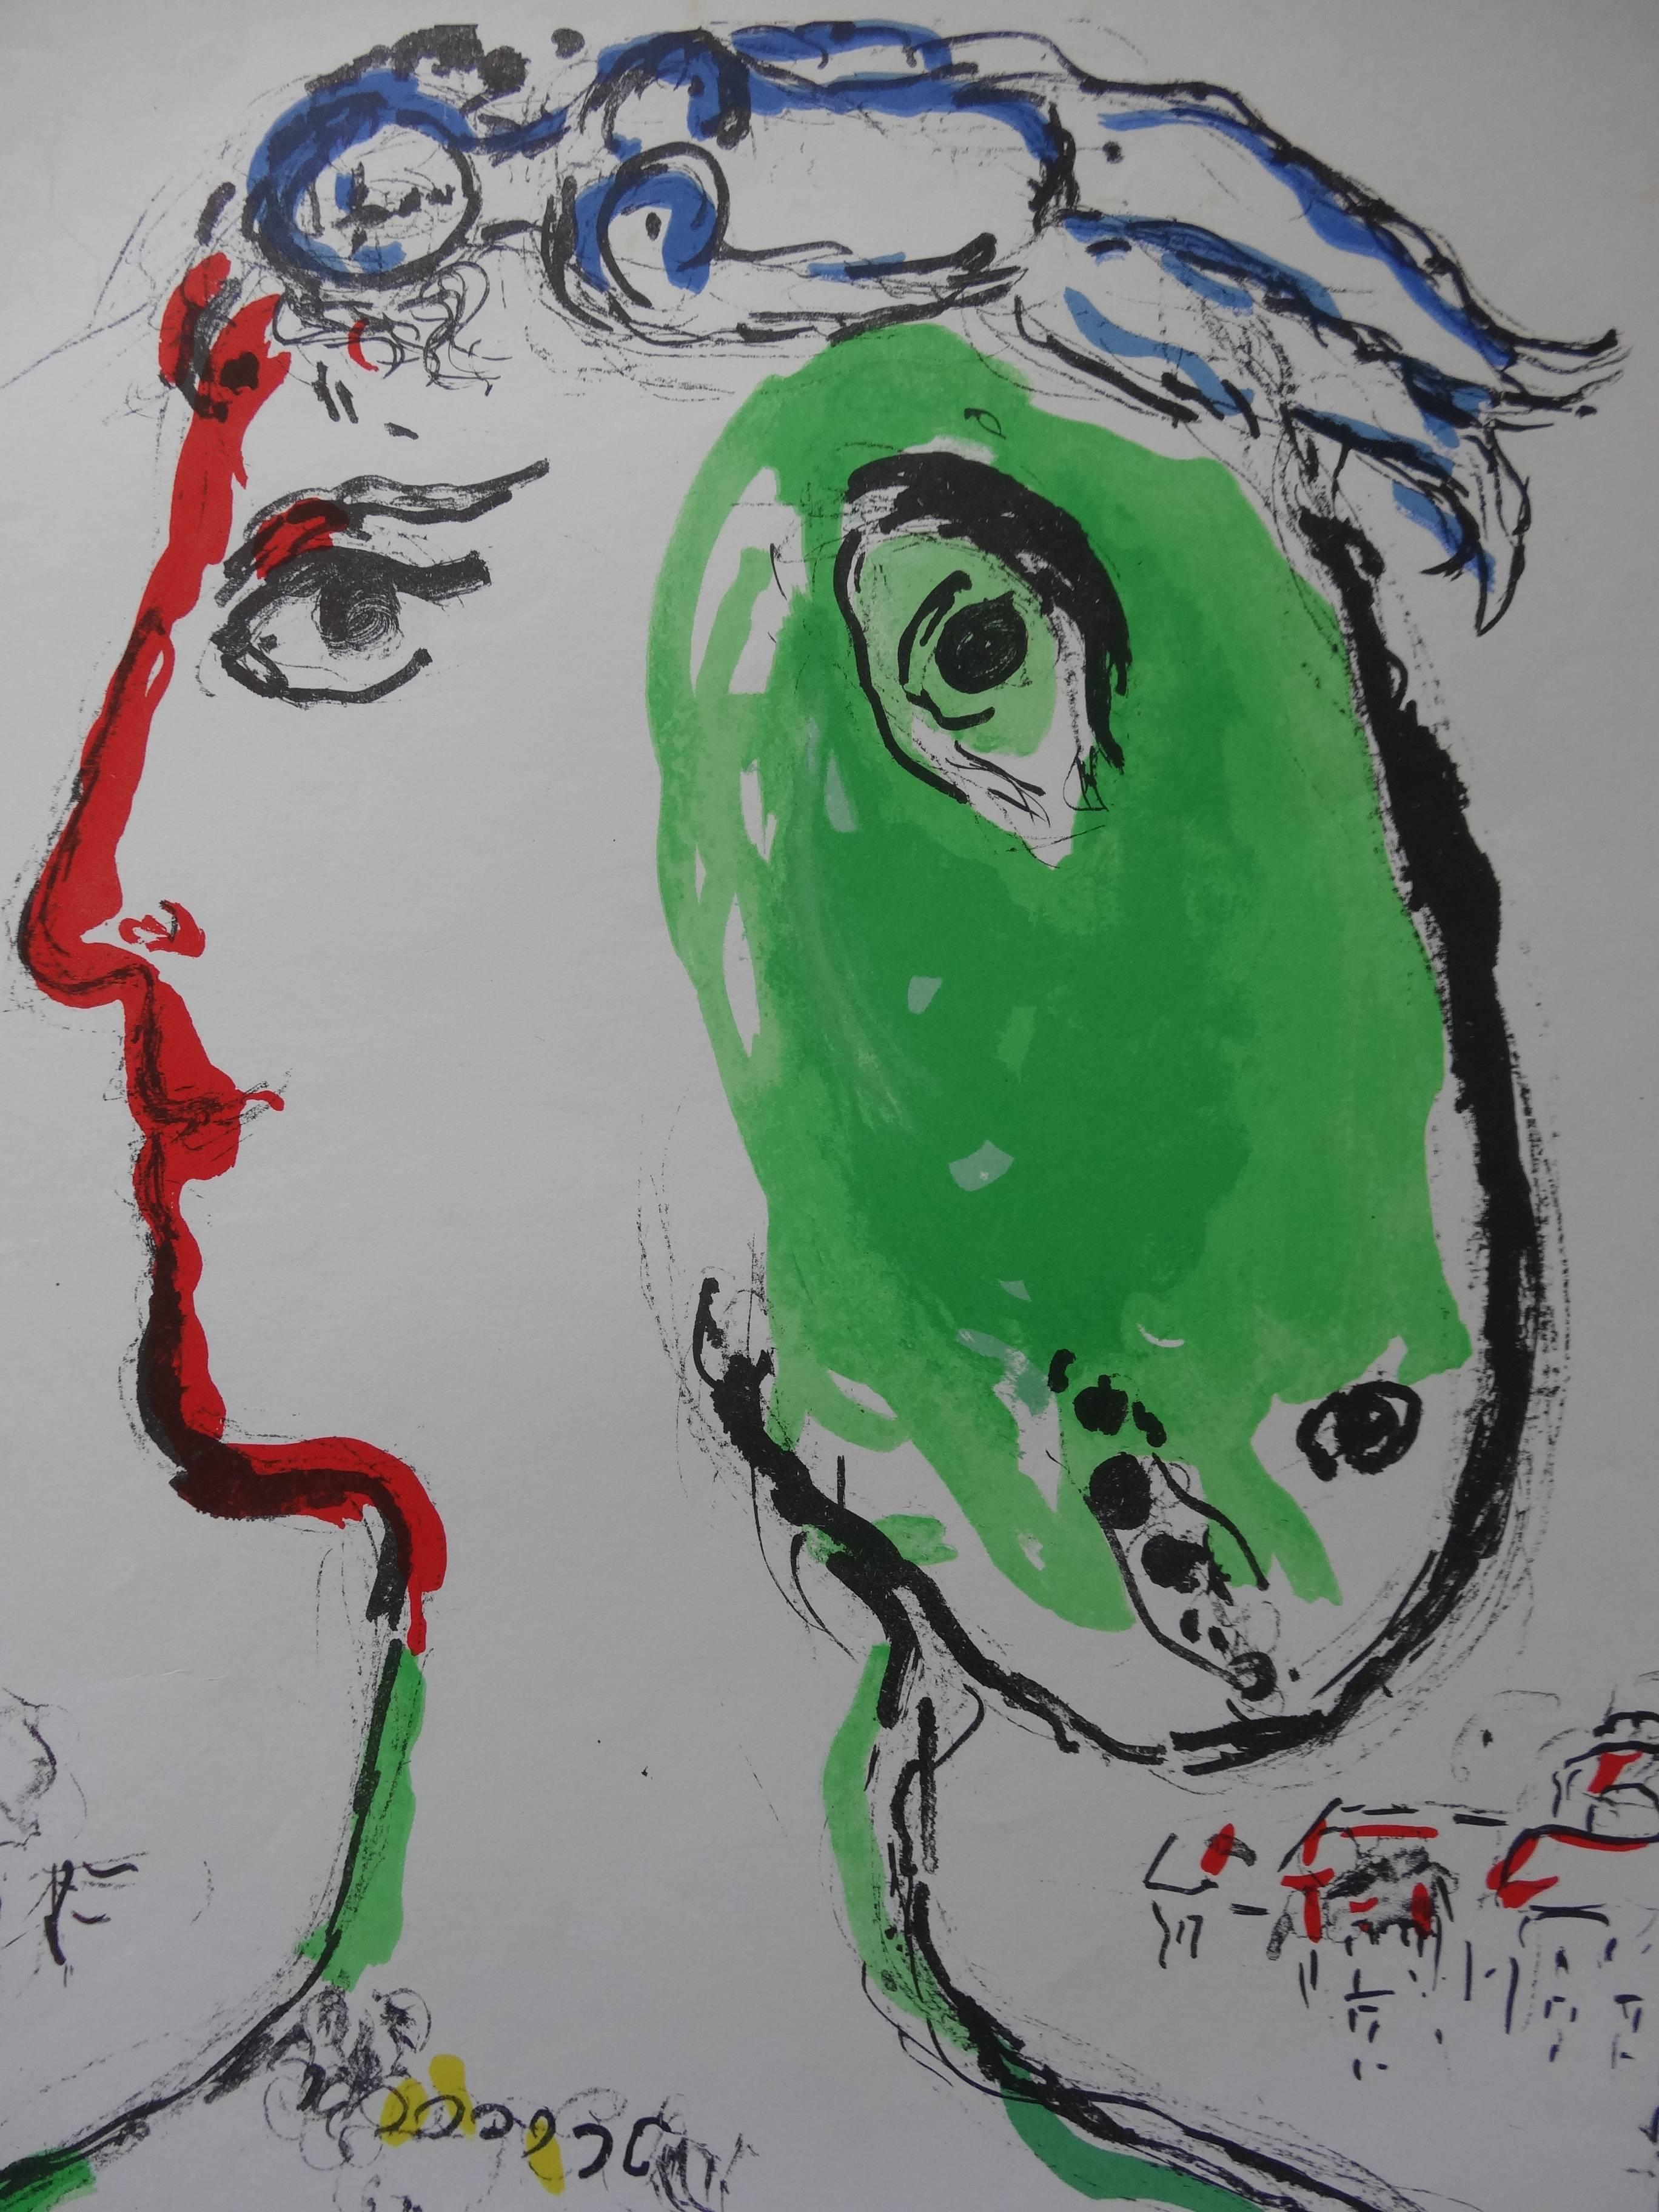 Artist as a Phoenix - Original lithograph poster - Mourlot - Surrealist Print by Marc Chagall